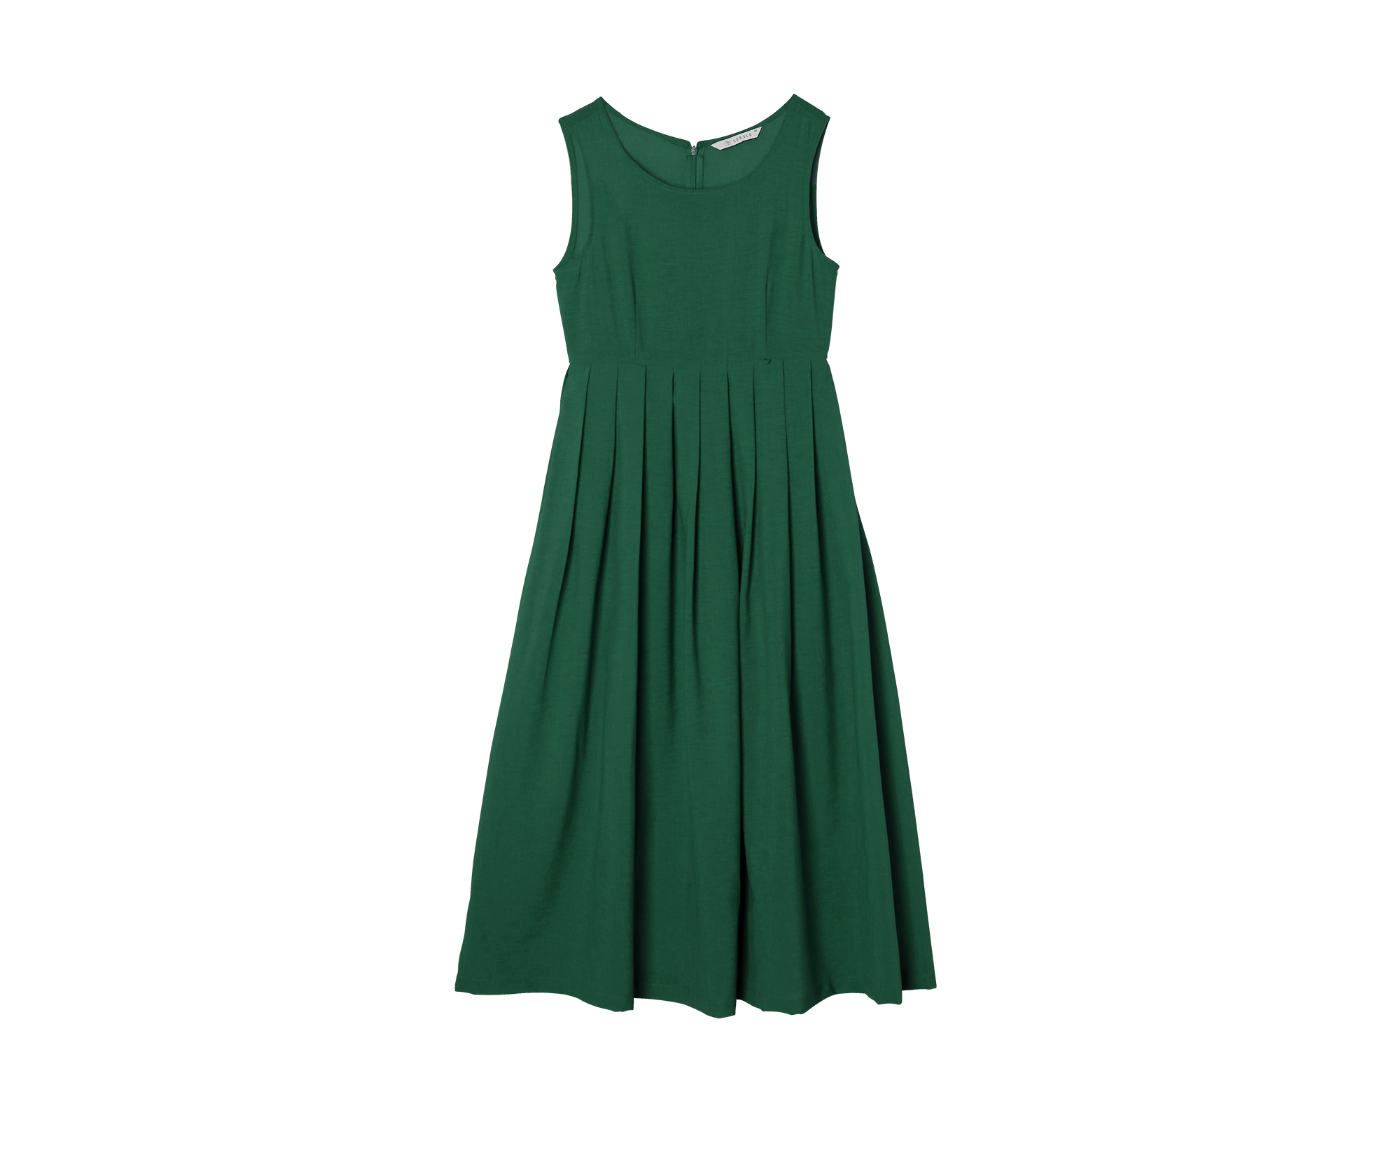 dress green color image-S1L30